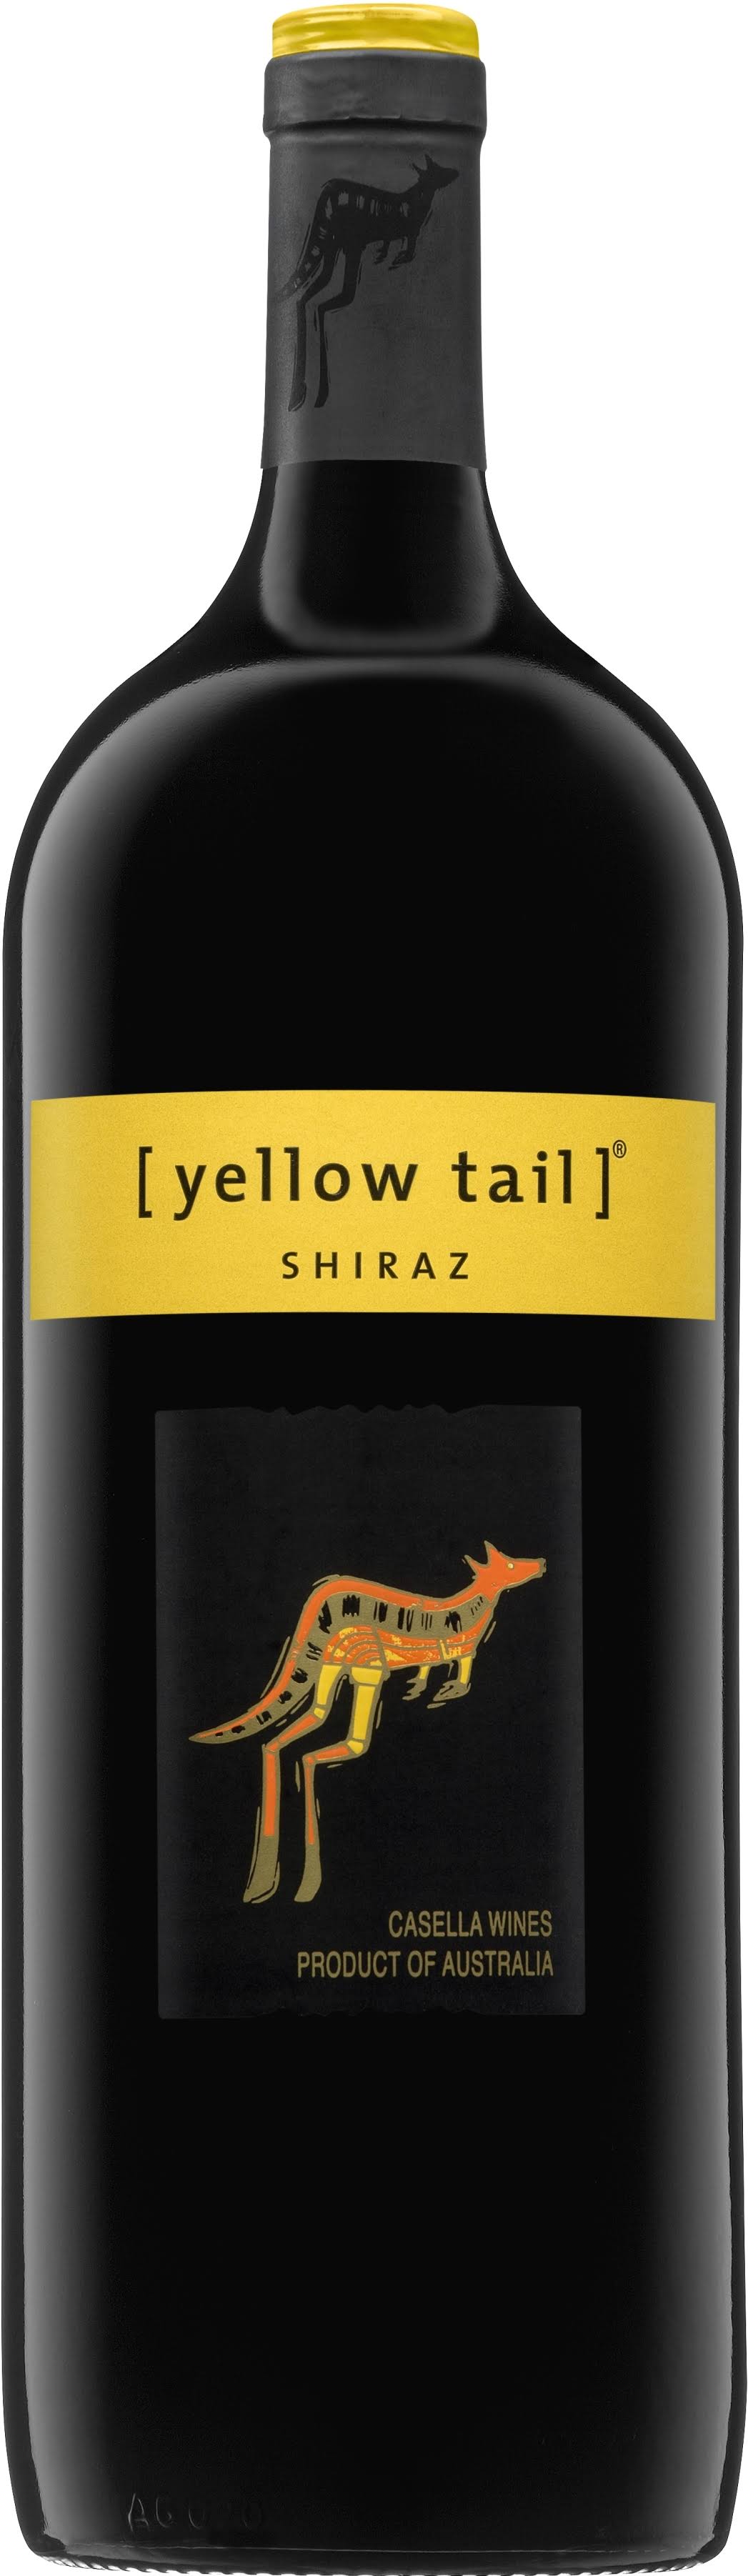 Yellow Tail Shiraz 1500 mL bottle